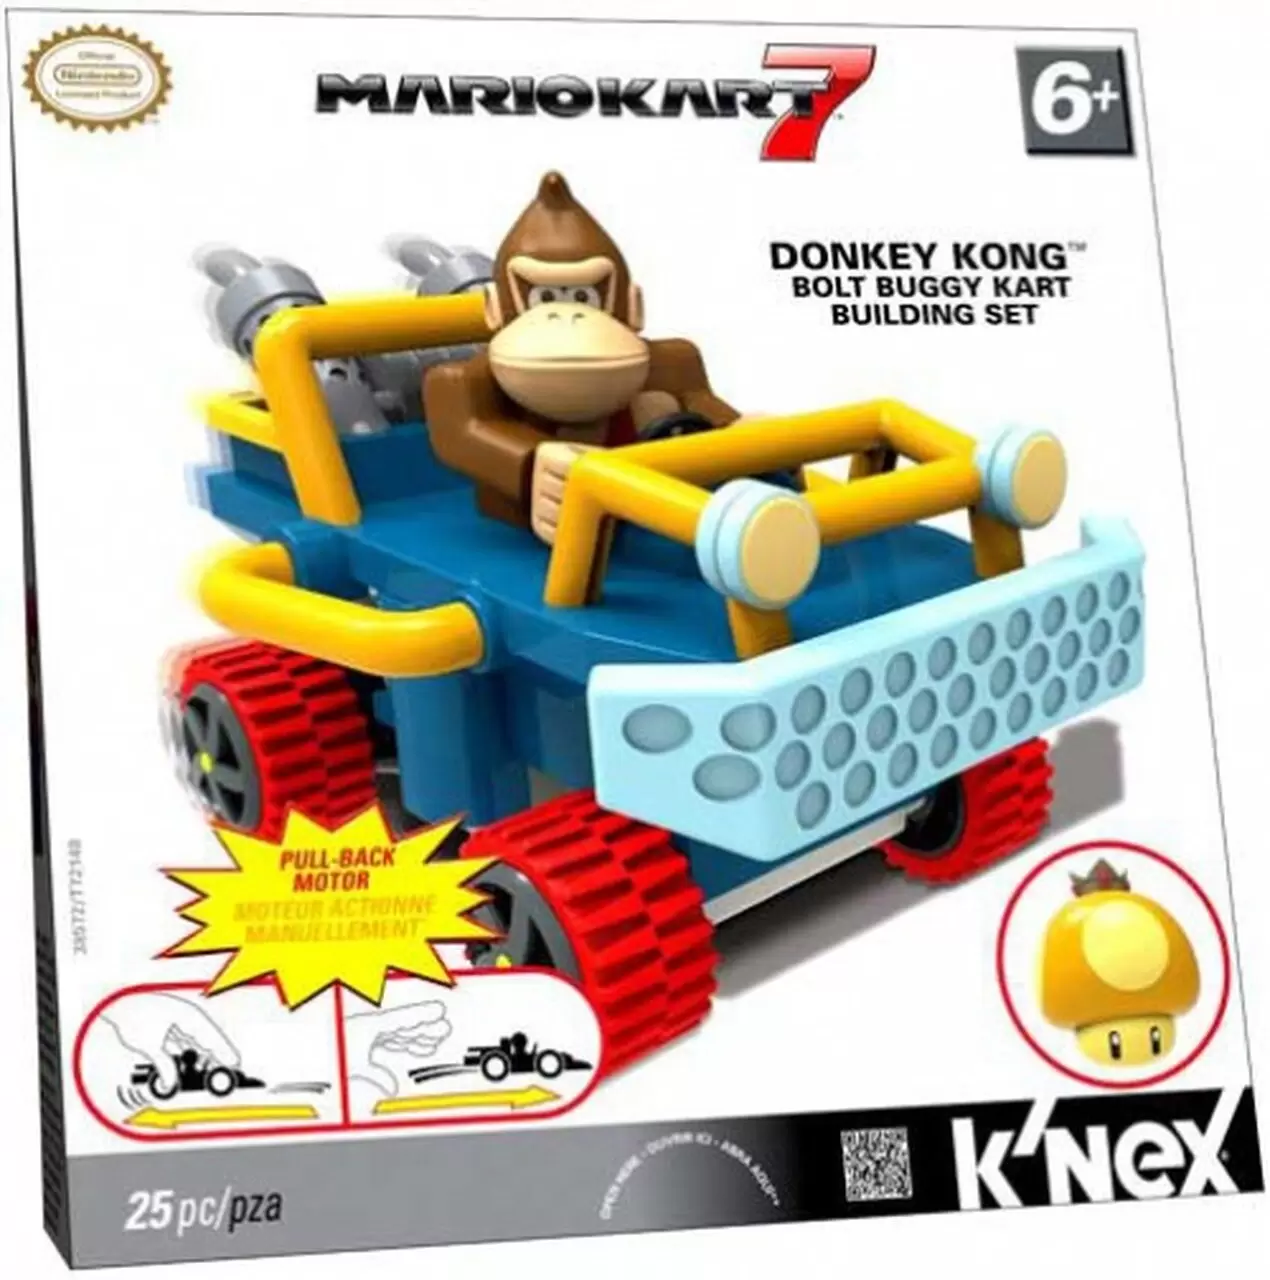 Mario - Donkey Kong Bolt Buggy Kart Building Set